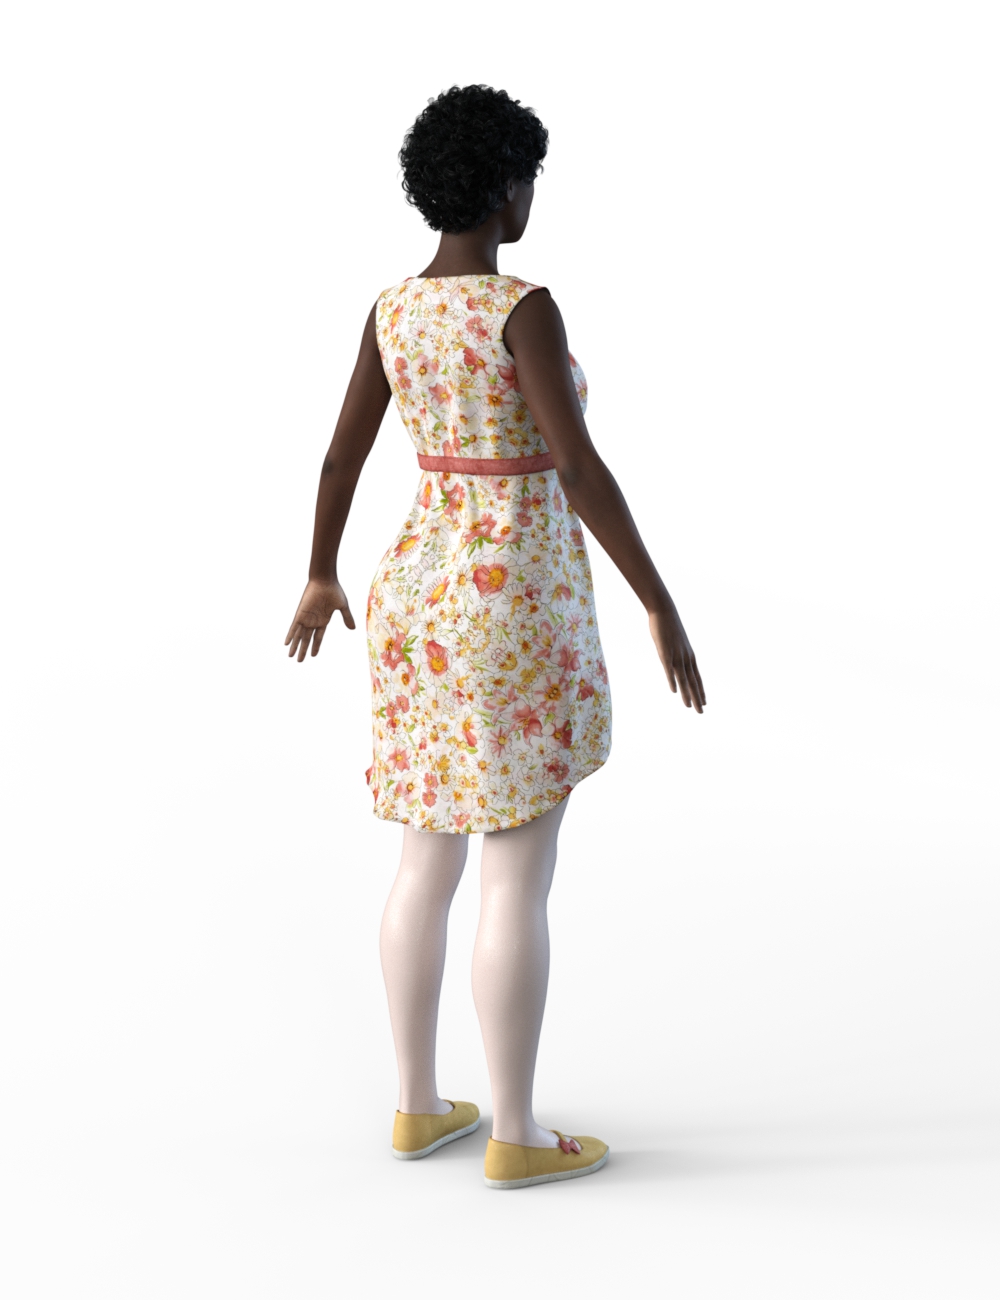 FBX- Lynsey Sunday Morning Outfit by: Paleo, 3D Models by Daz 3D